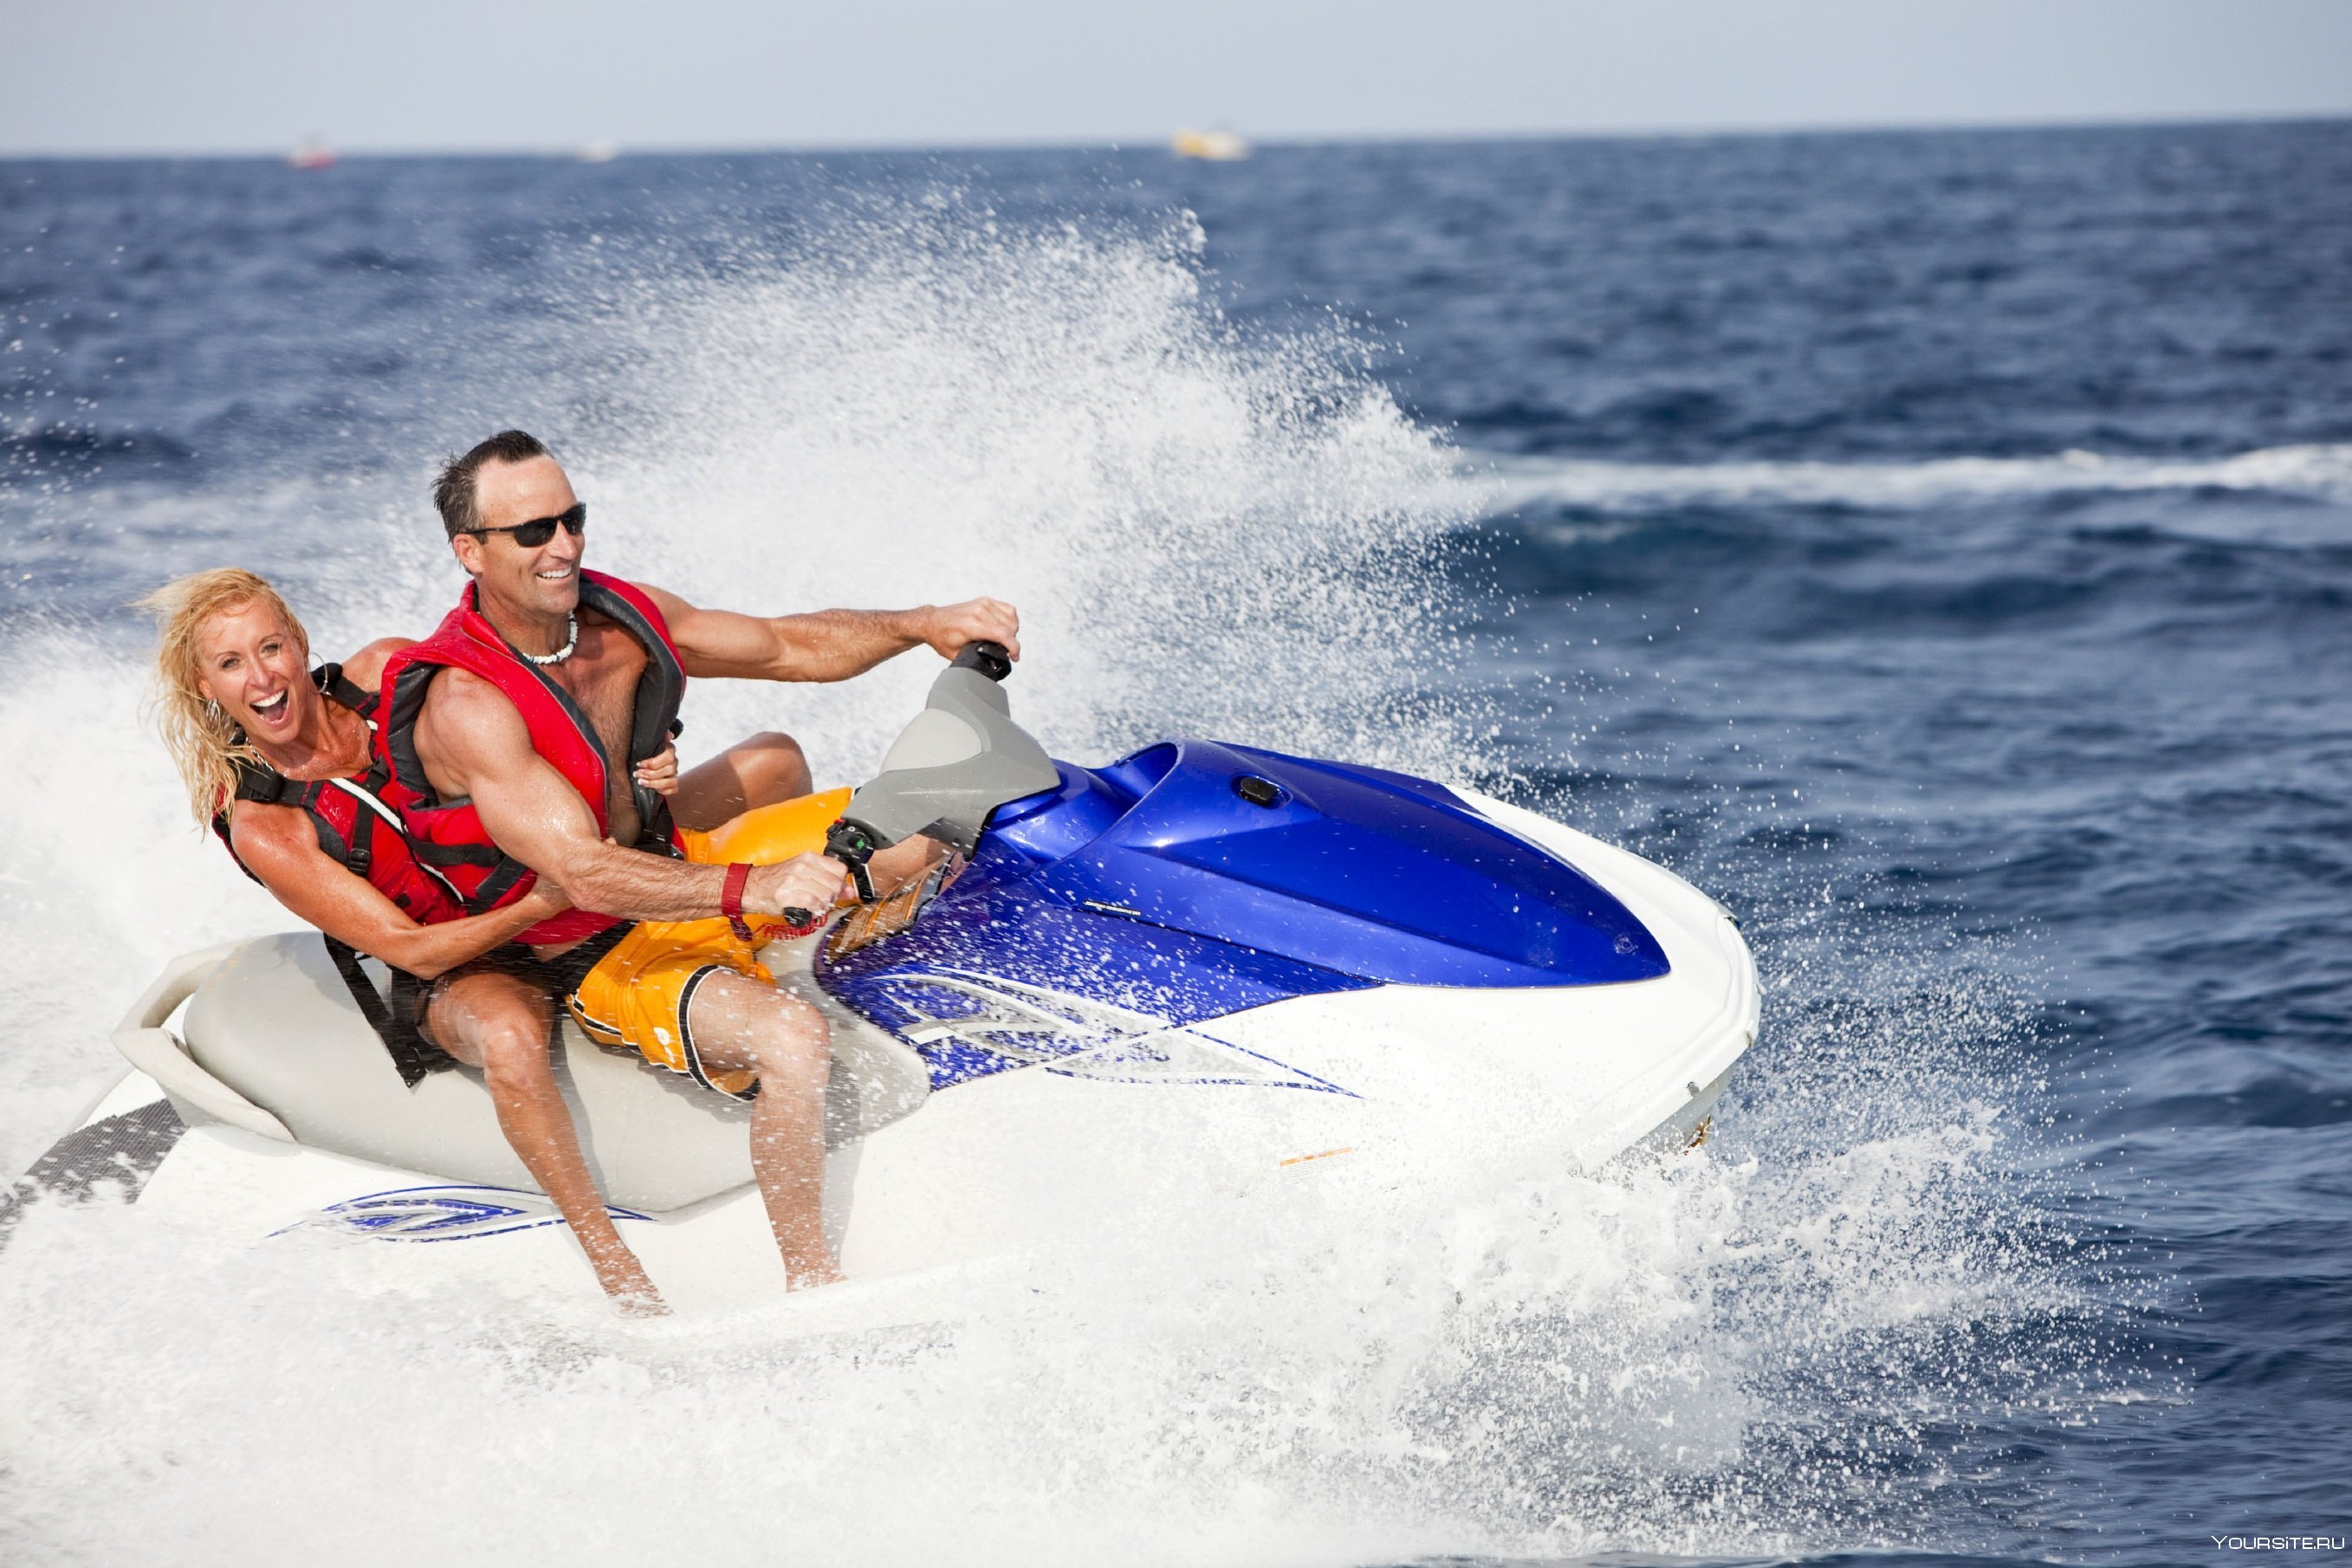 Гидроцикл развлечение. Гидроцикл Jet Ski 200. Кататься на водном мотоцикле. Покататься на водном мотоцикле. Водный мотоцикл на пляже.